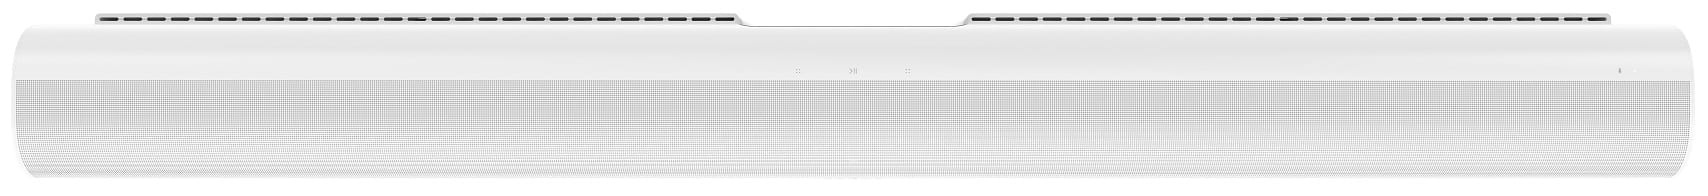 Sonos ARC wit - bovenaanzicht - Soundbar